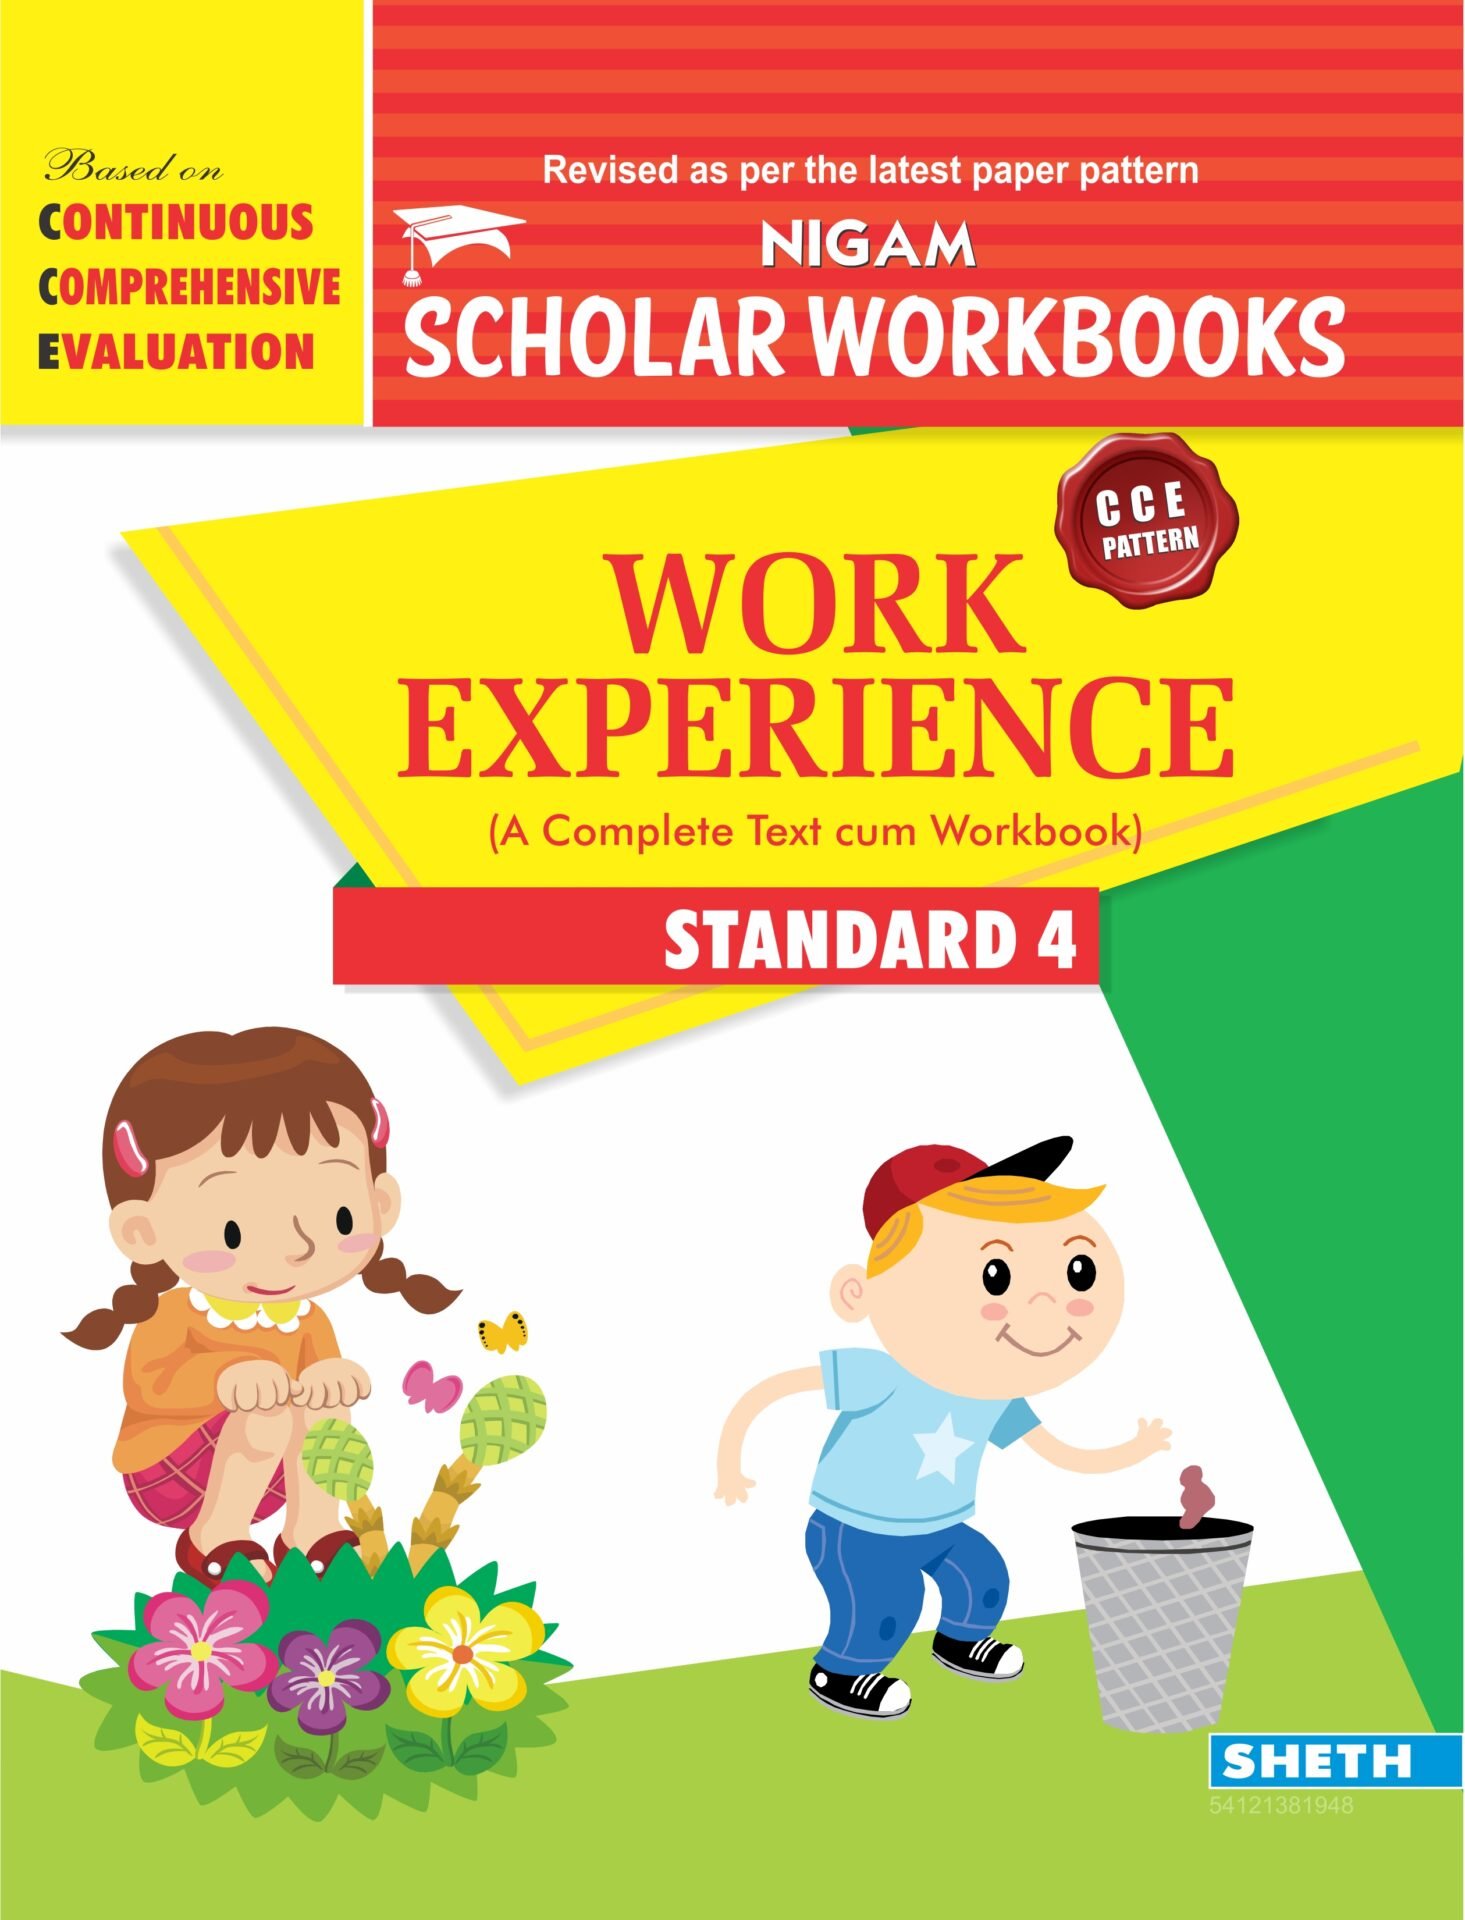 CCE Pattern Nigam Scholar Workbooks Work Experience Standard 4 1